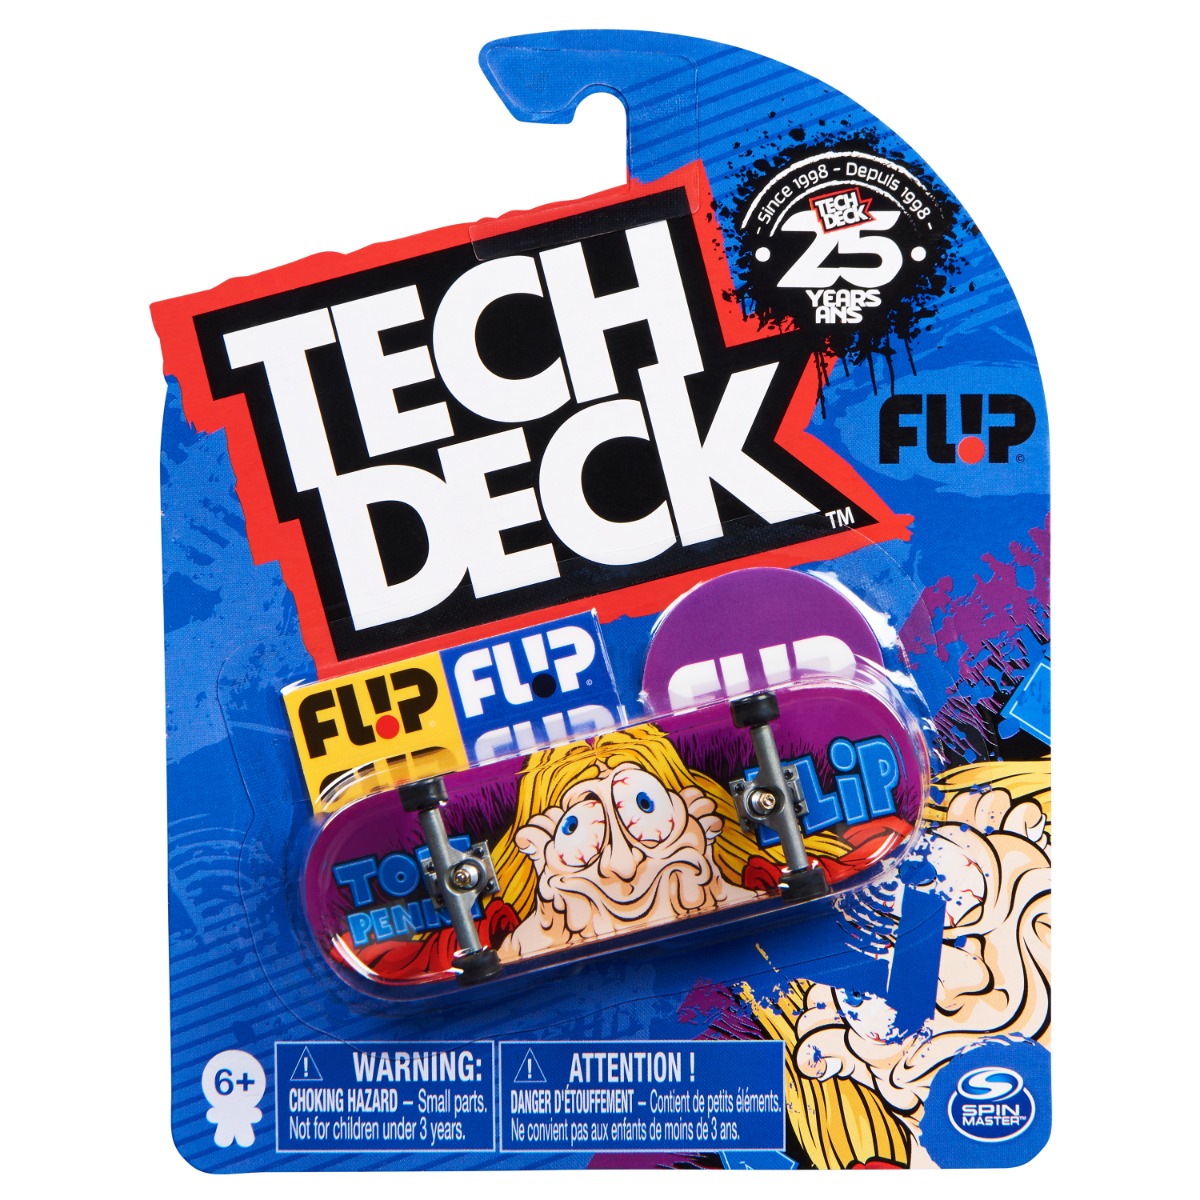 Mini placa skateboard Tech Deck, Flip Tom Penny 25 Years, 20141237